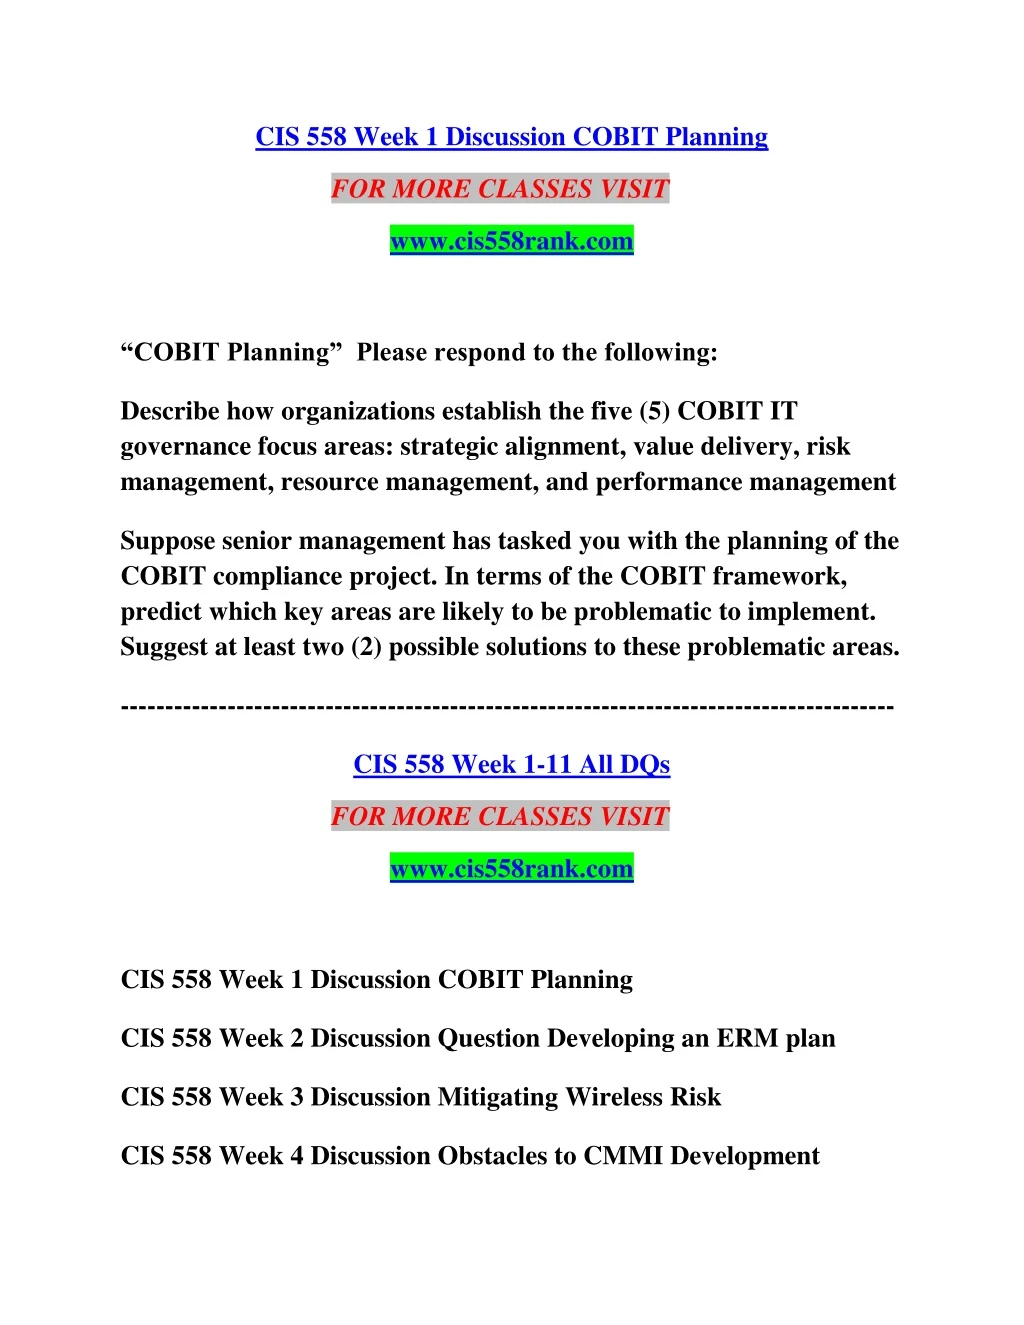 cis 558 week 1 discussion cobit planning